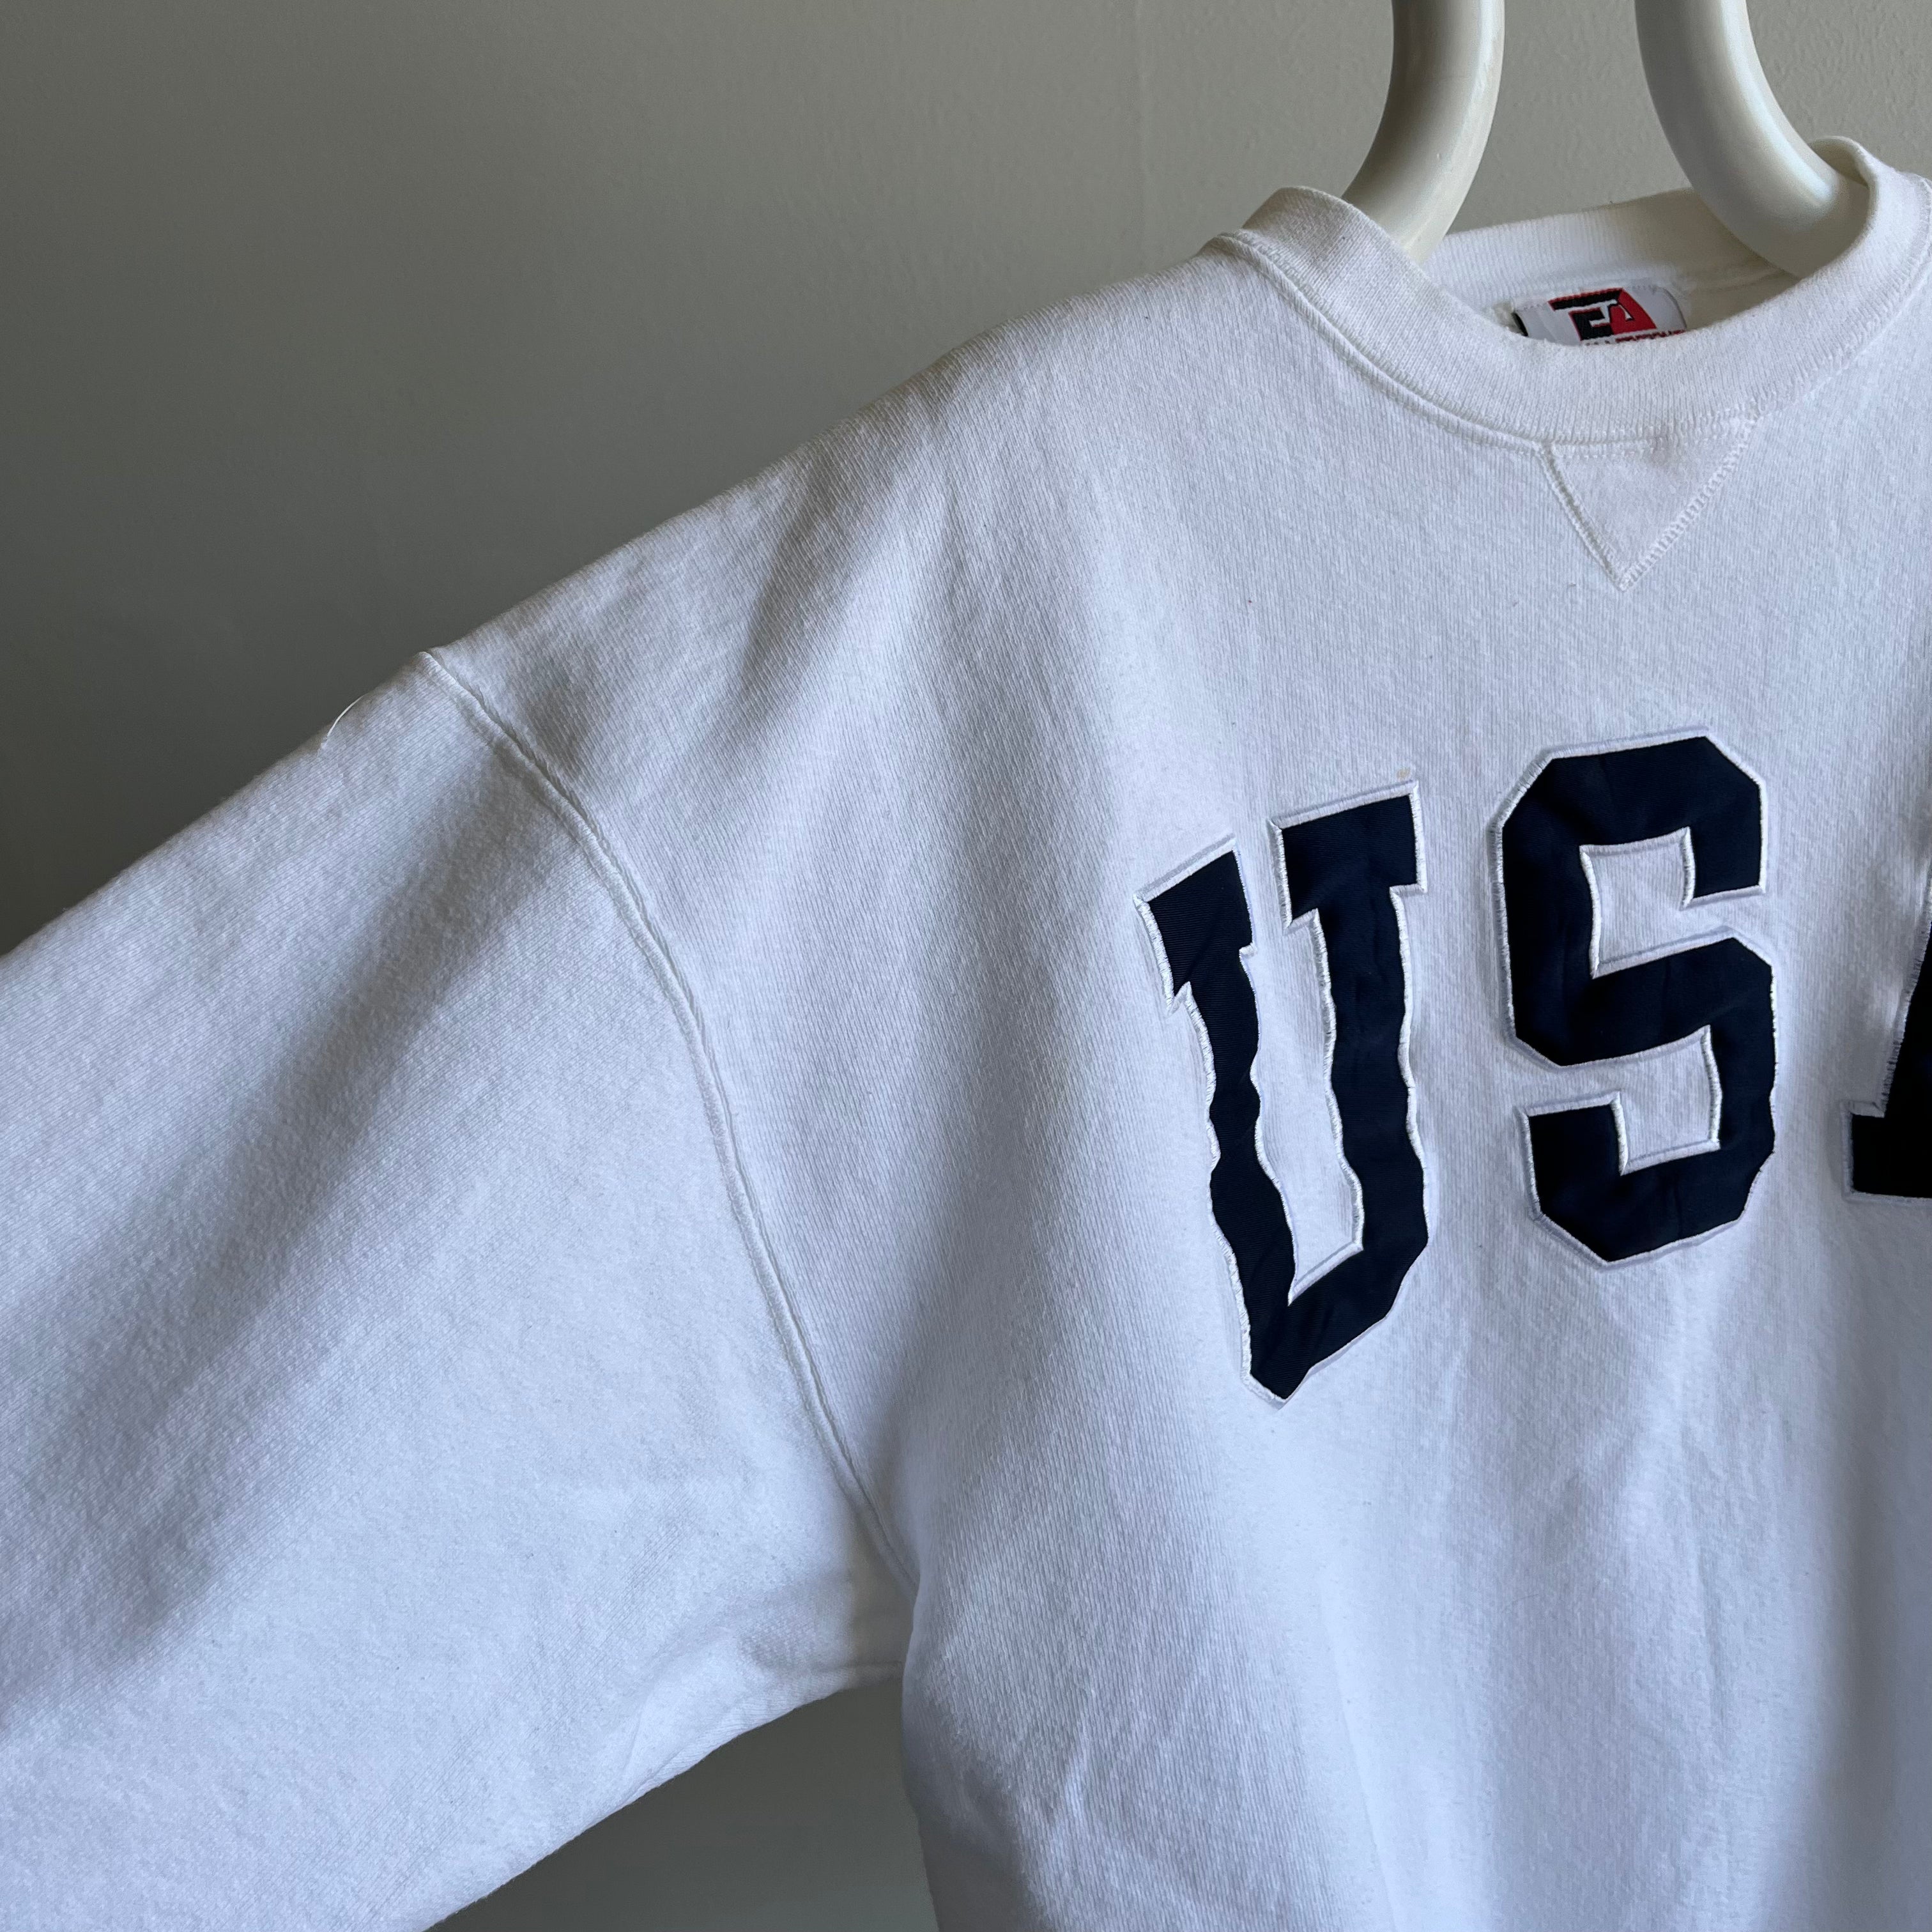 1980s/90s USA Sweatshirt